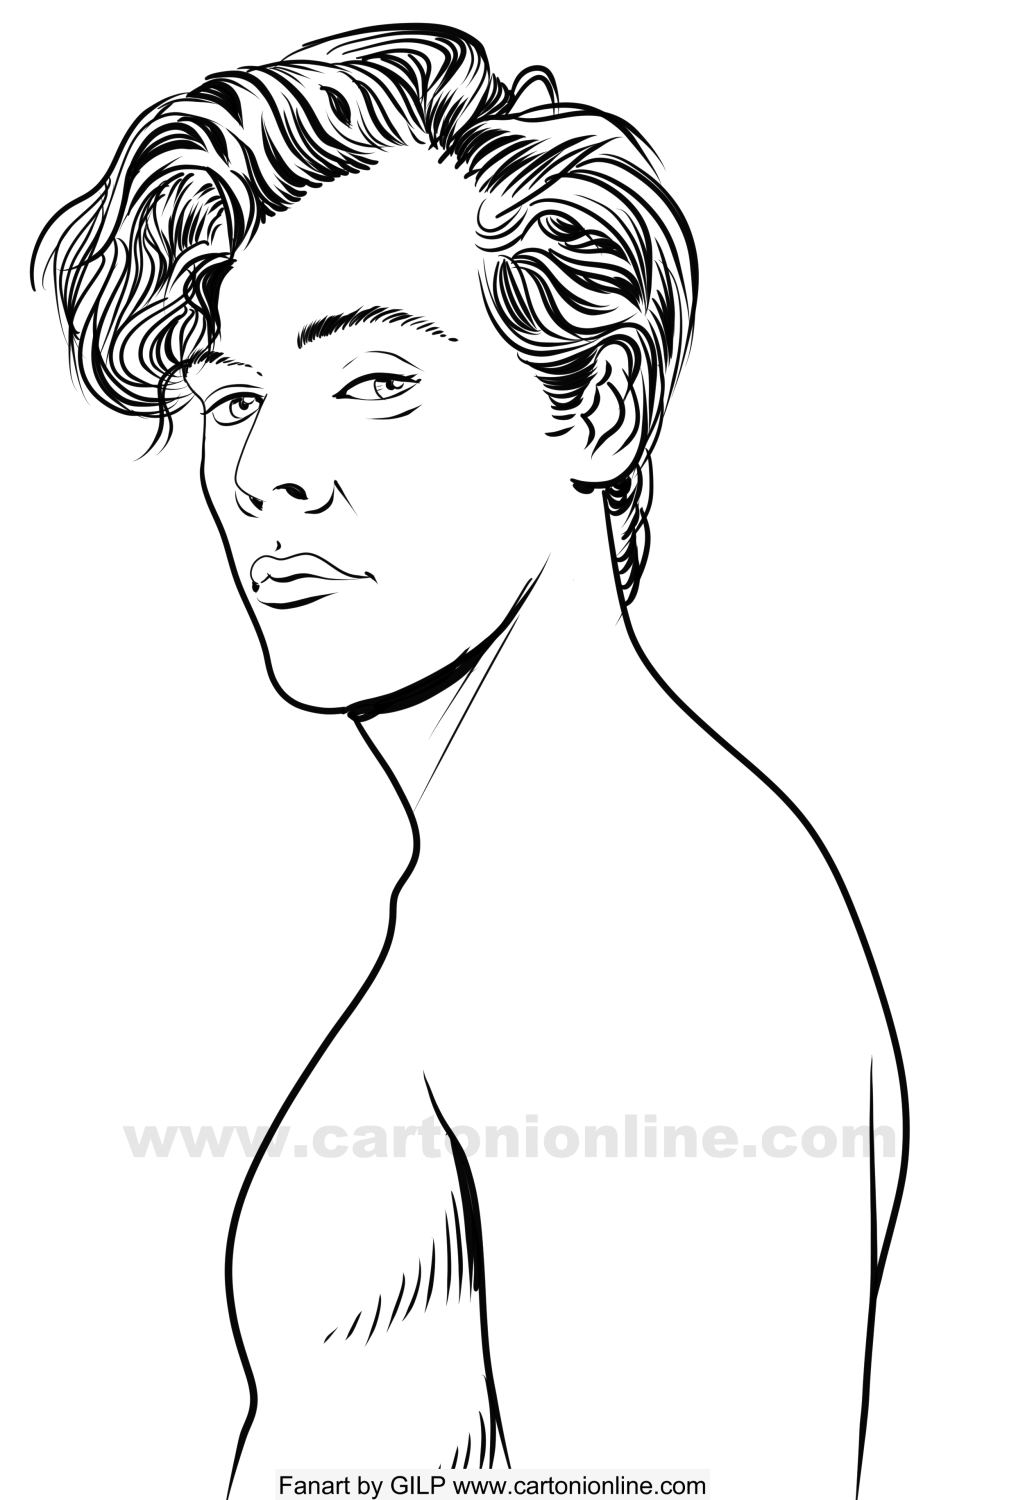 Desenho de Harry Styles 06 de One Direction para imprimir e colorir